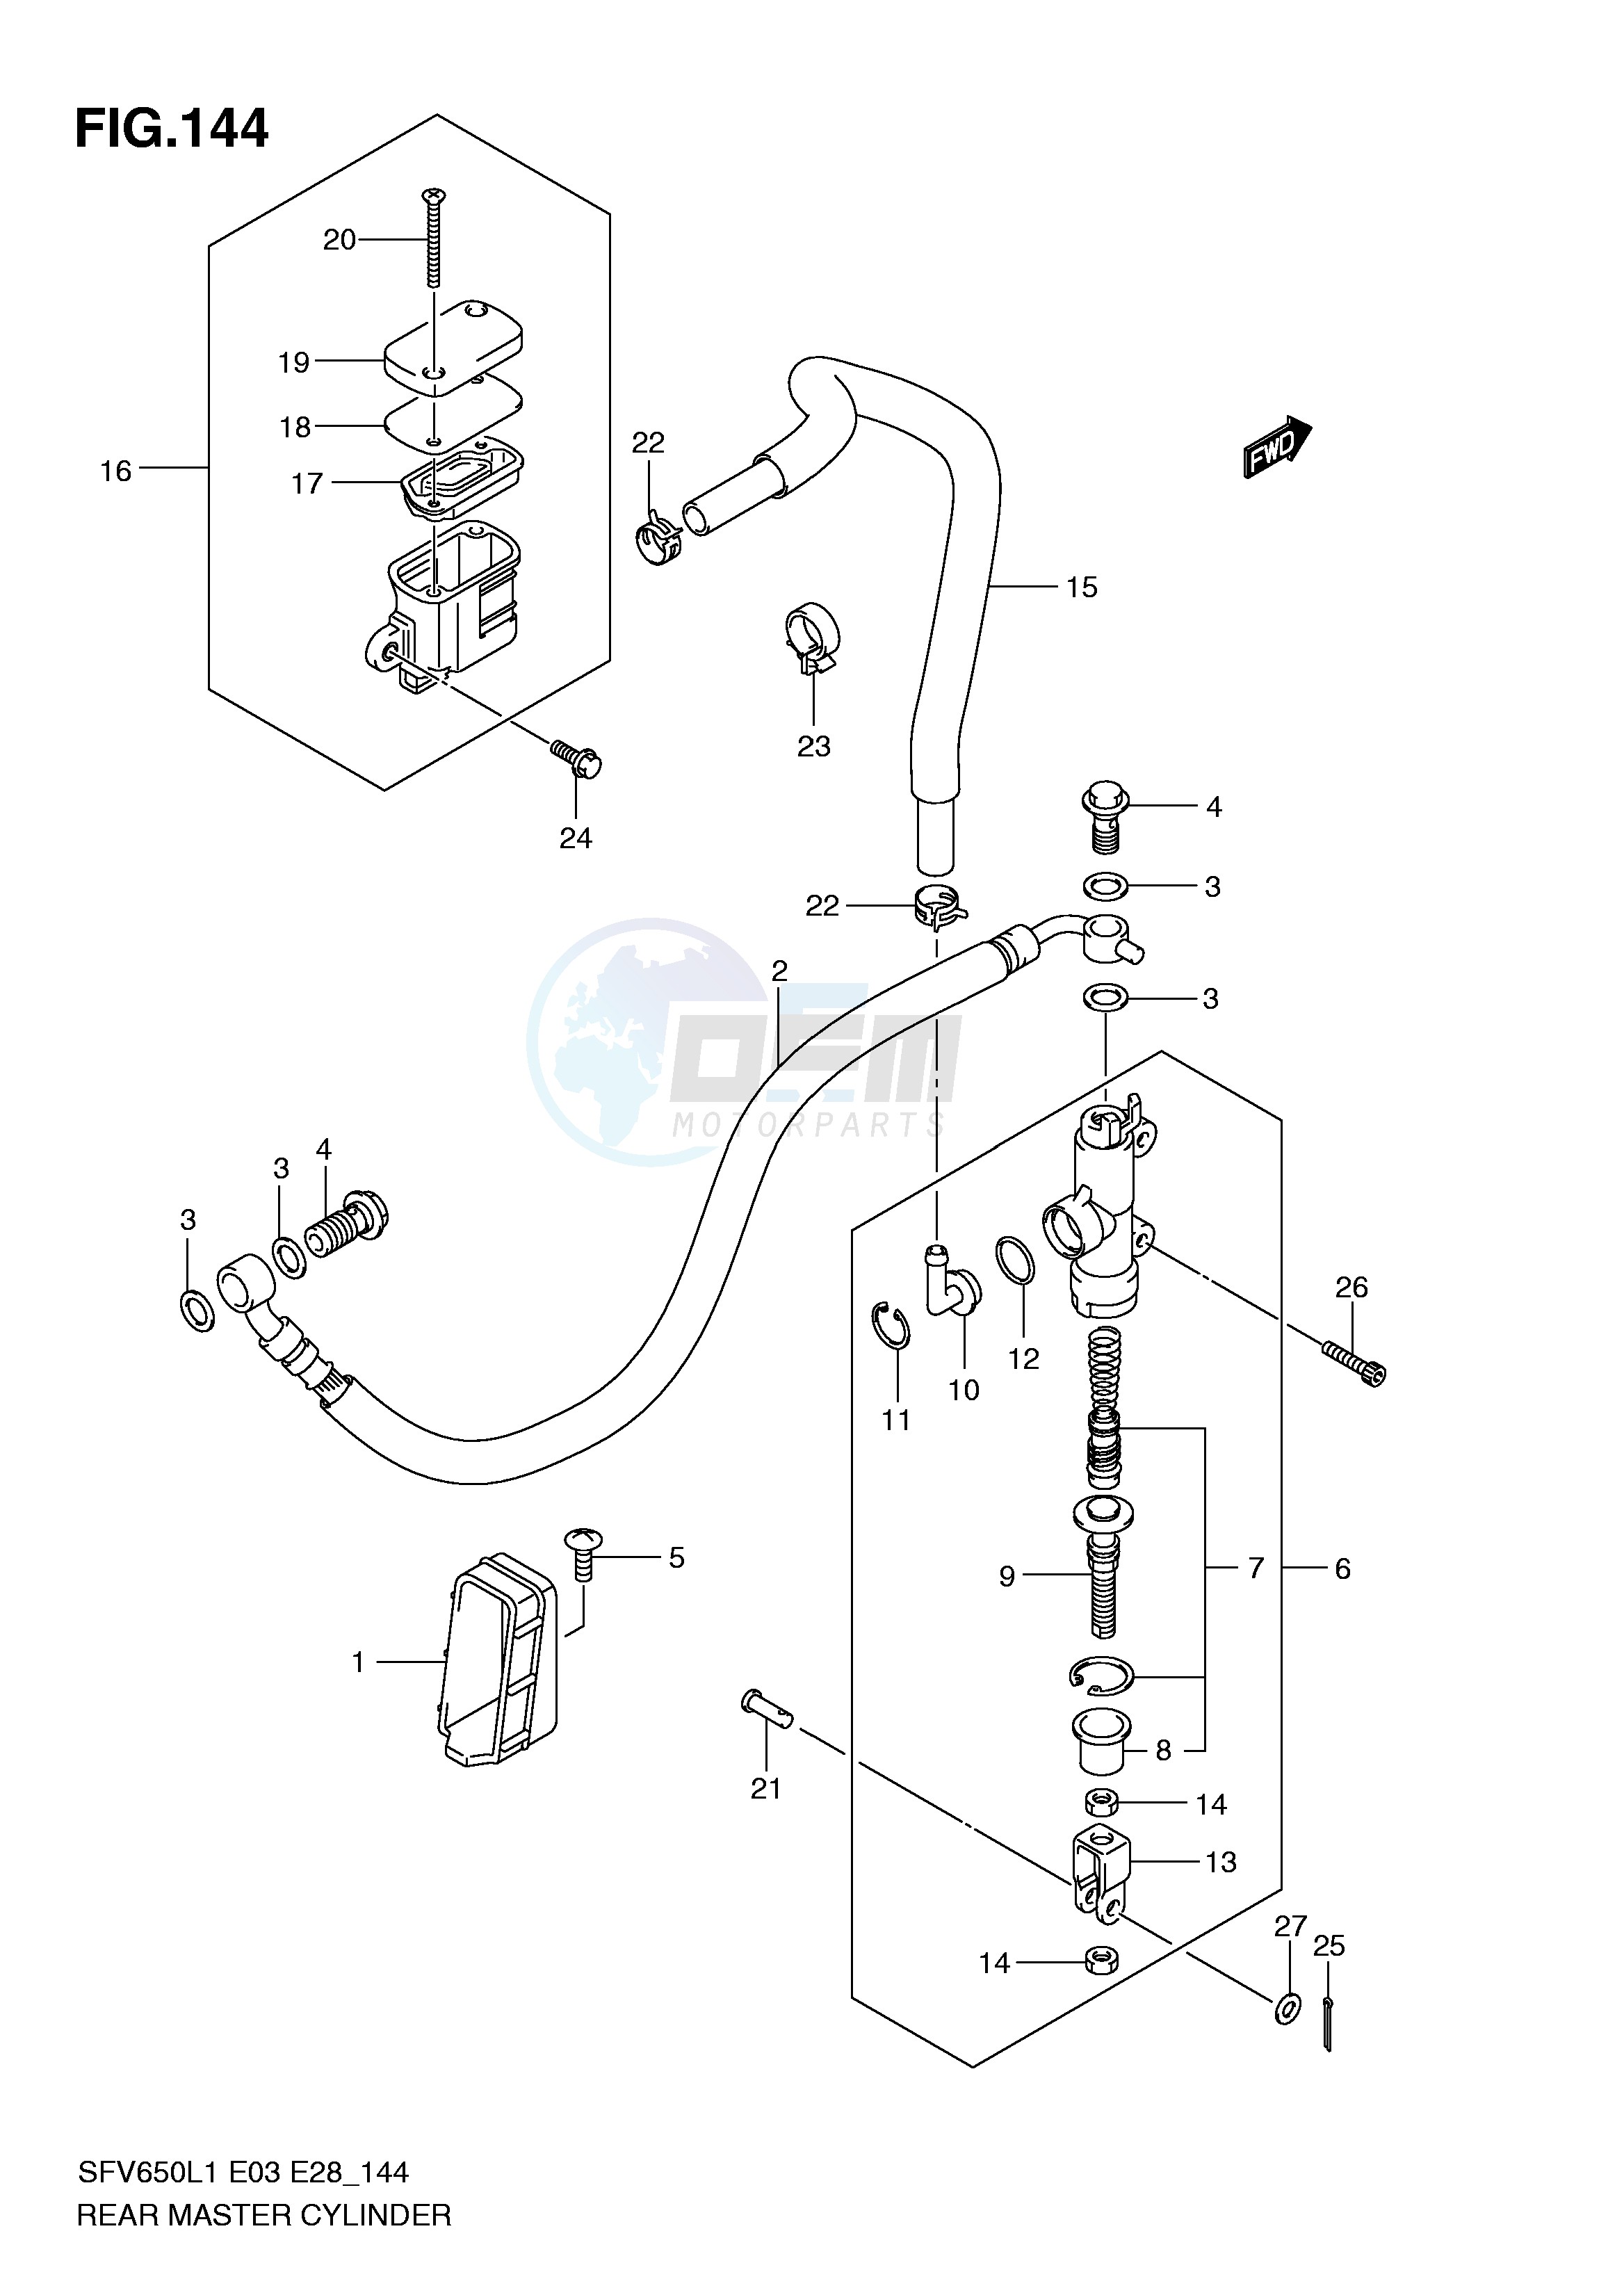 REAR MASTER CYLINDER (SFV650L1 E3) blueprint